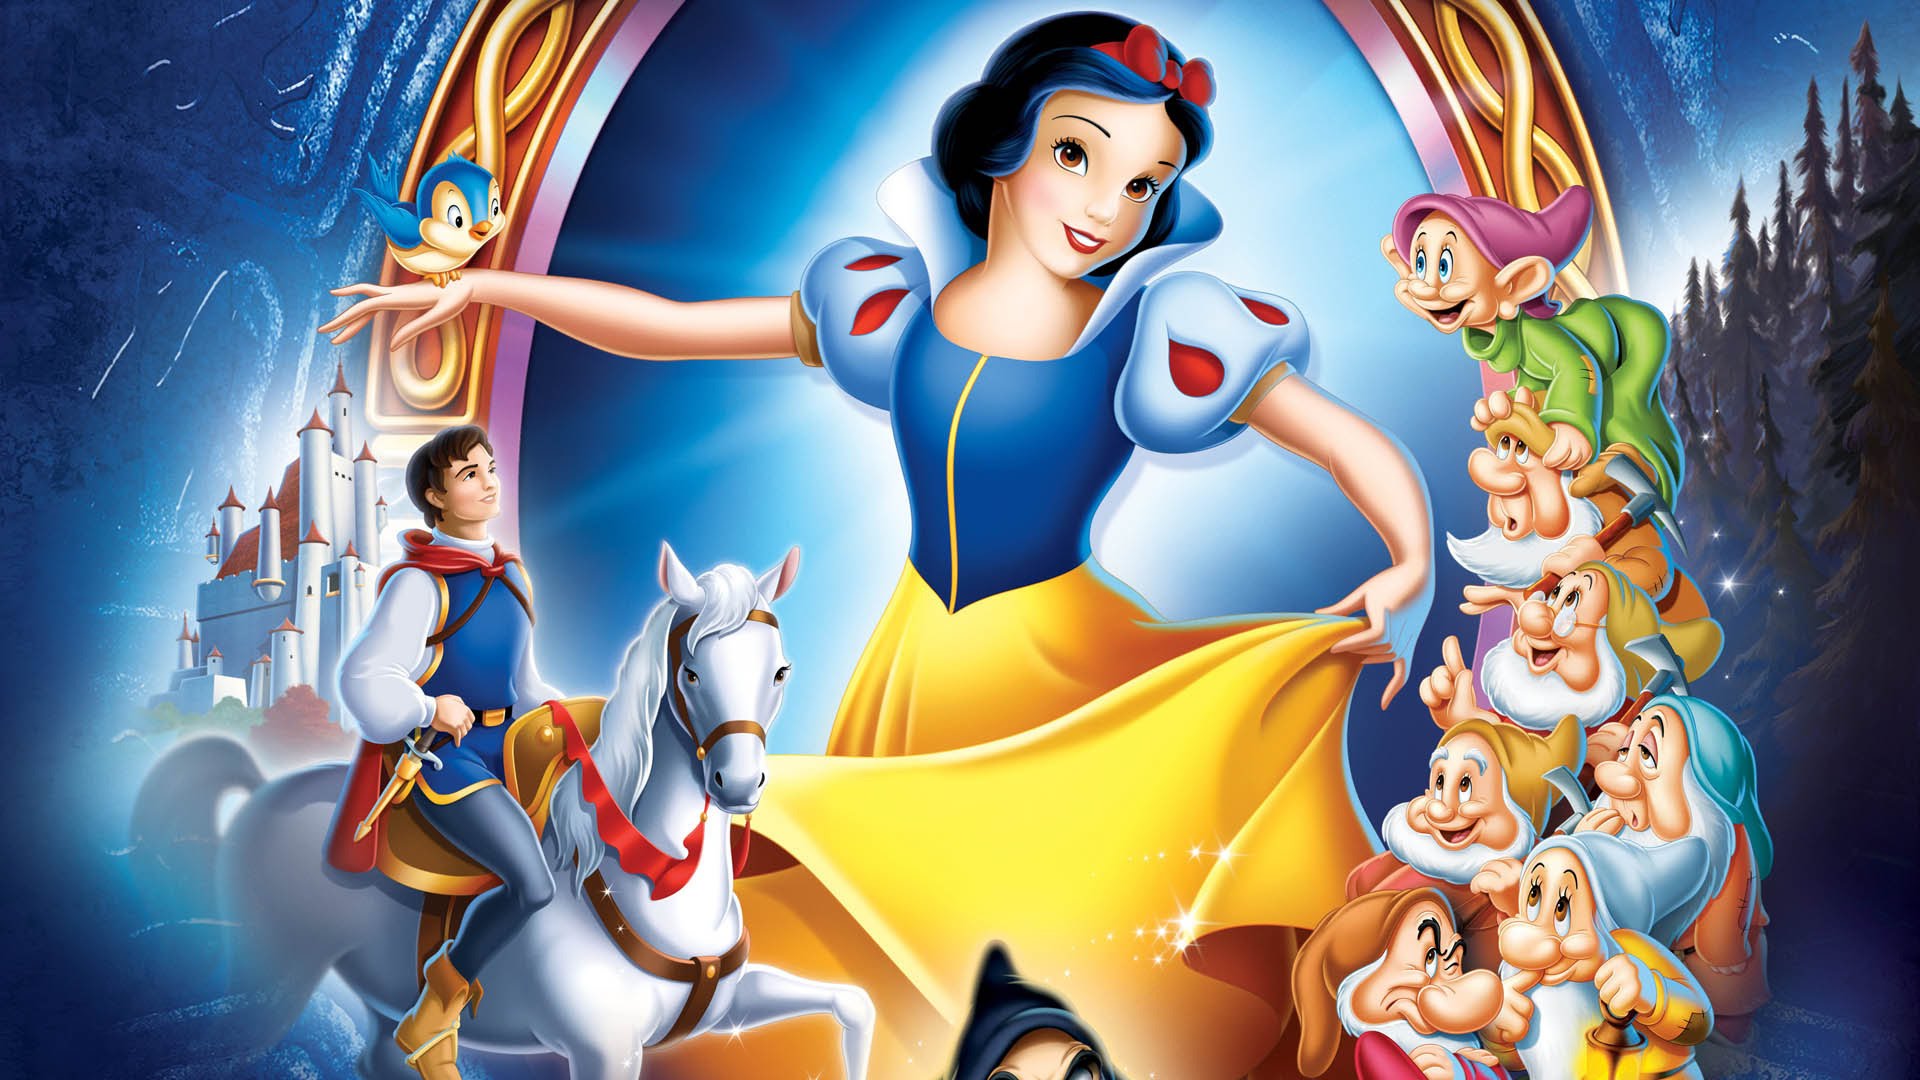 Snow White and the Seven Dwarfs - Full Movie 1937